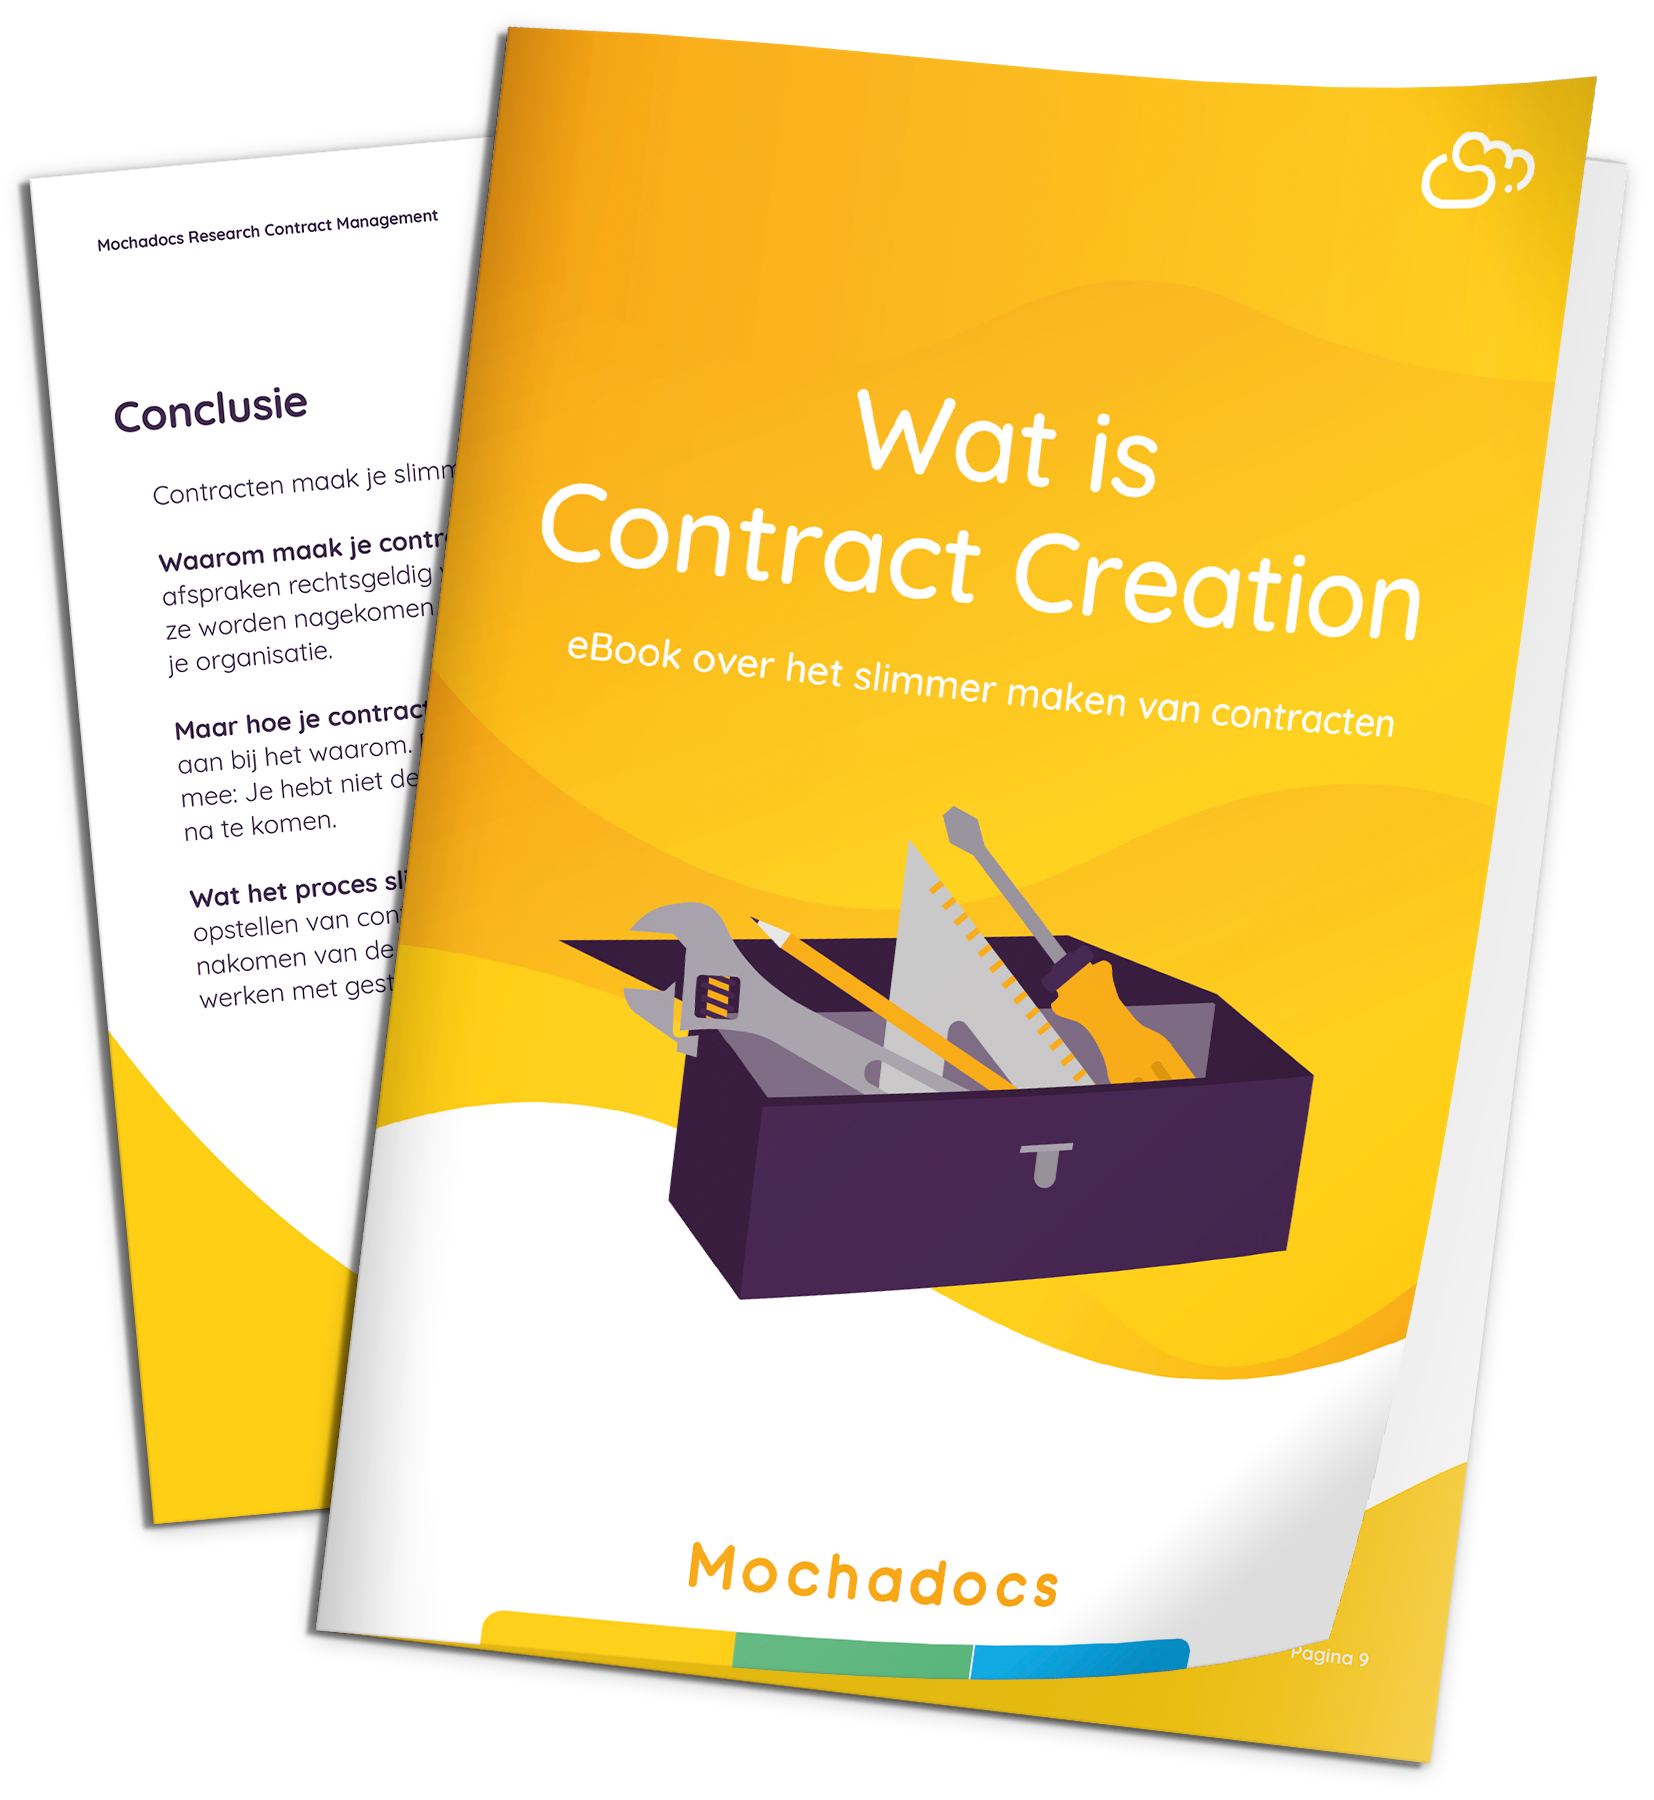 Mochadocs - Contract Creation - Wat is Contract Creation